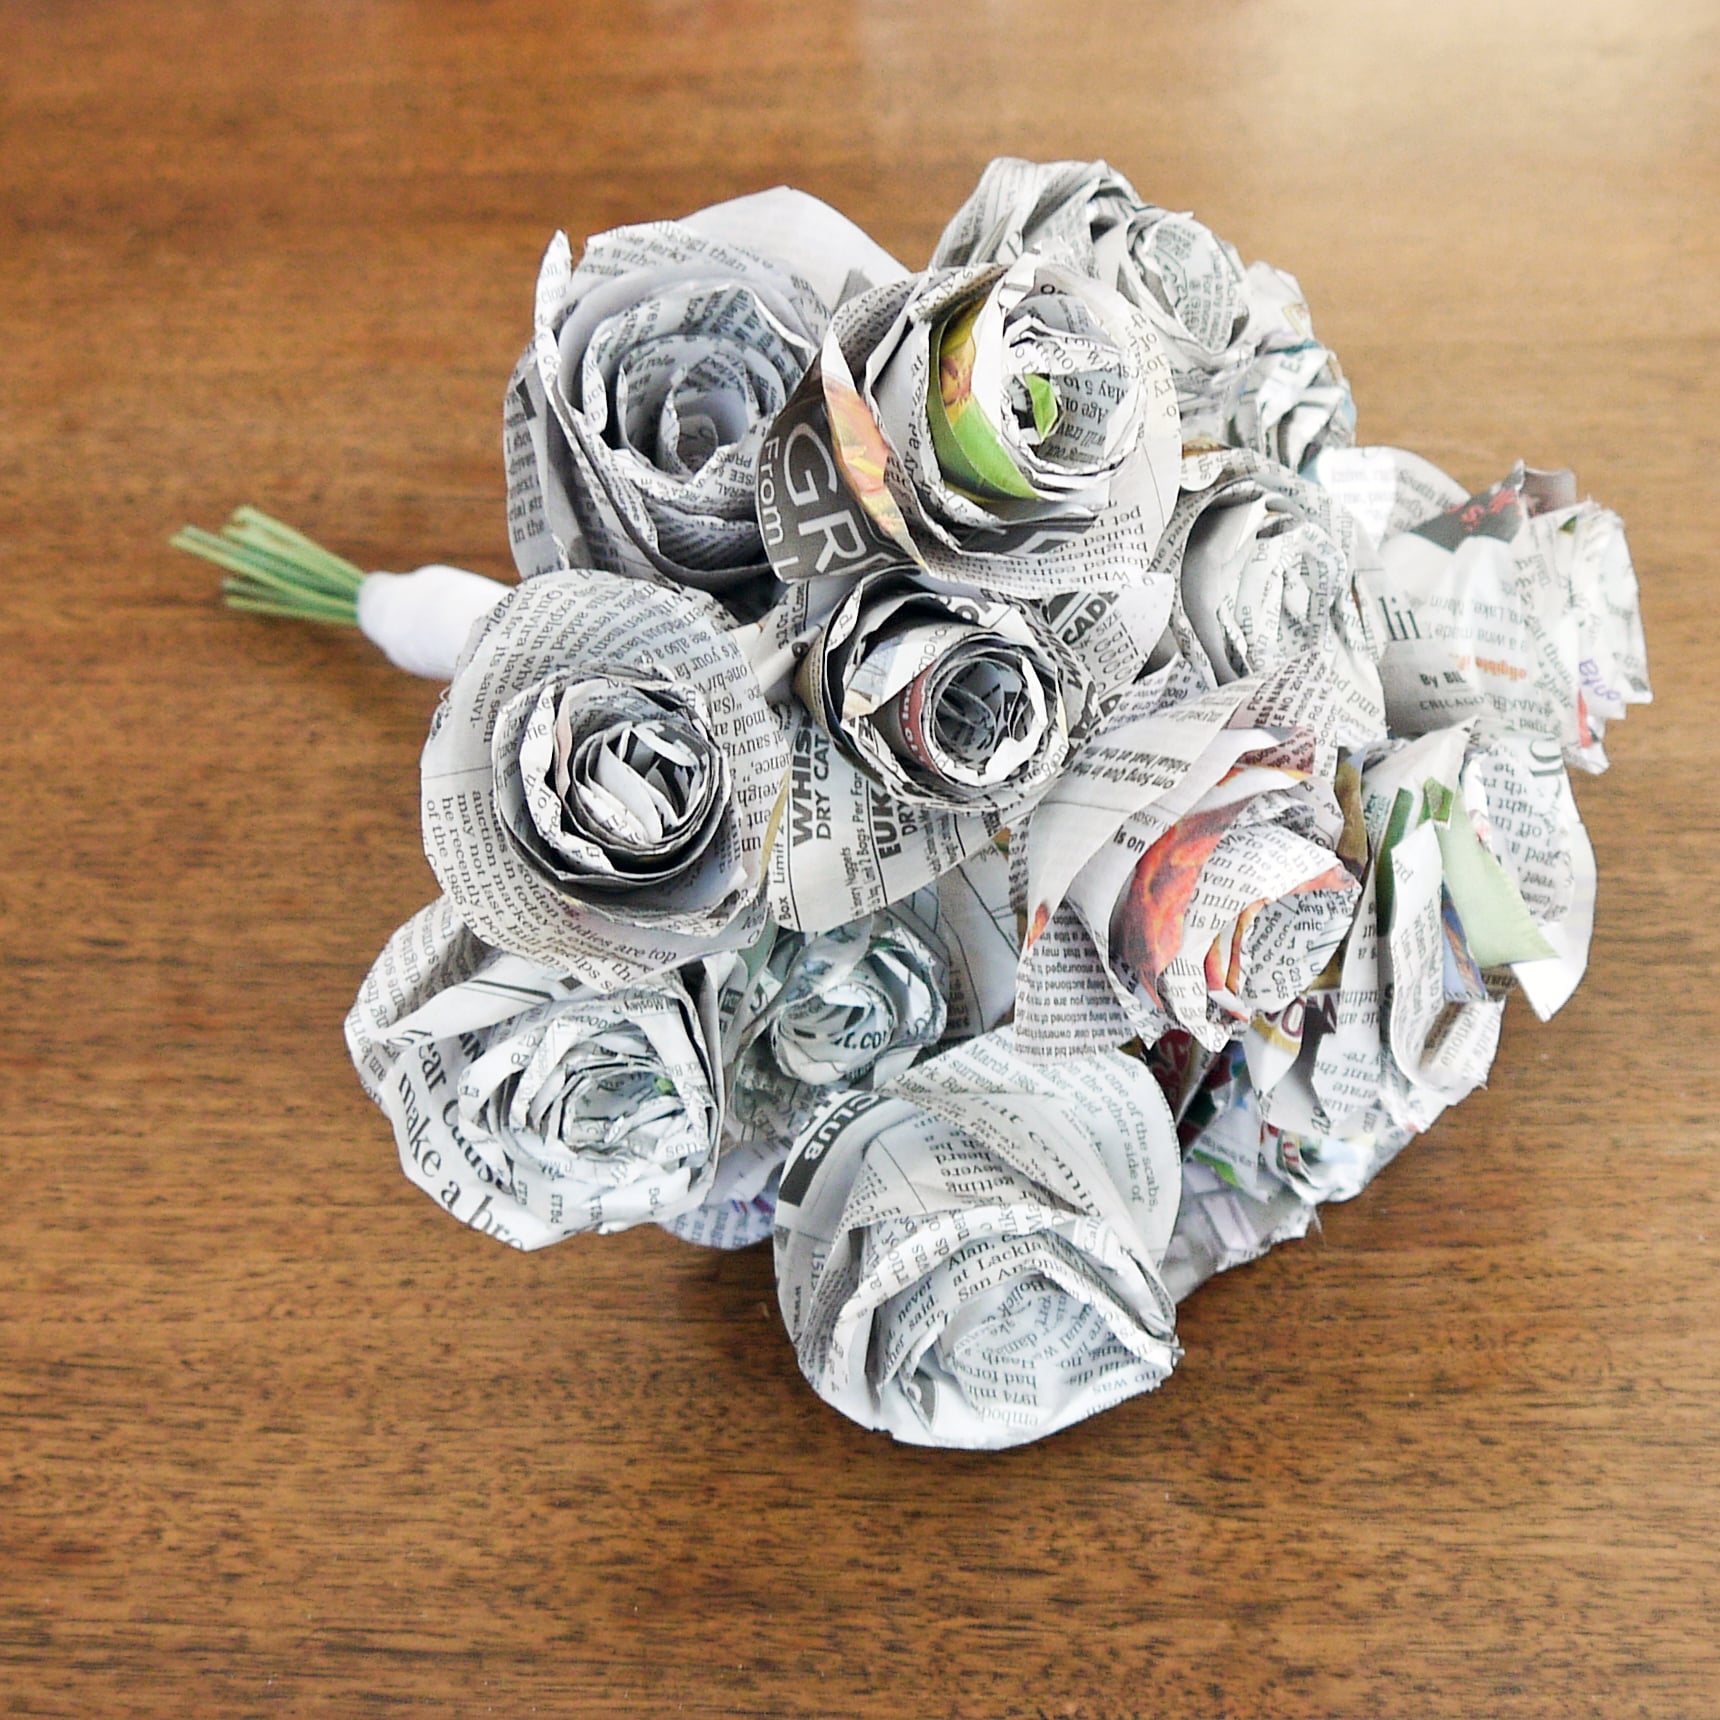 DIY Paper Flower Kit - Materials & Instructions for DIY Wedding